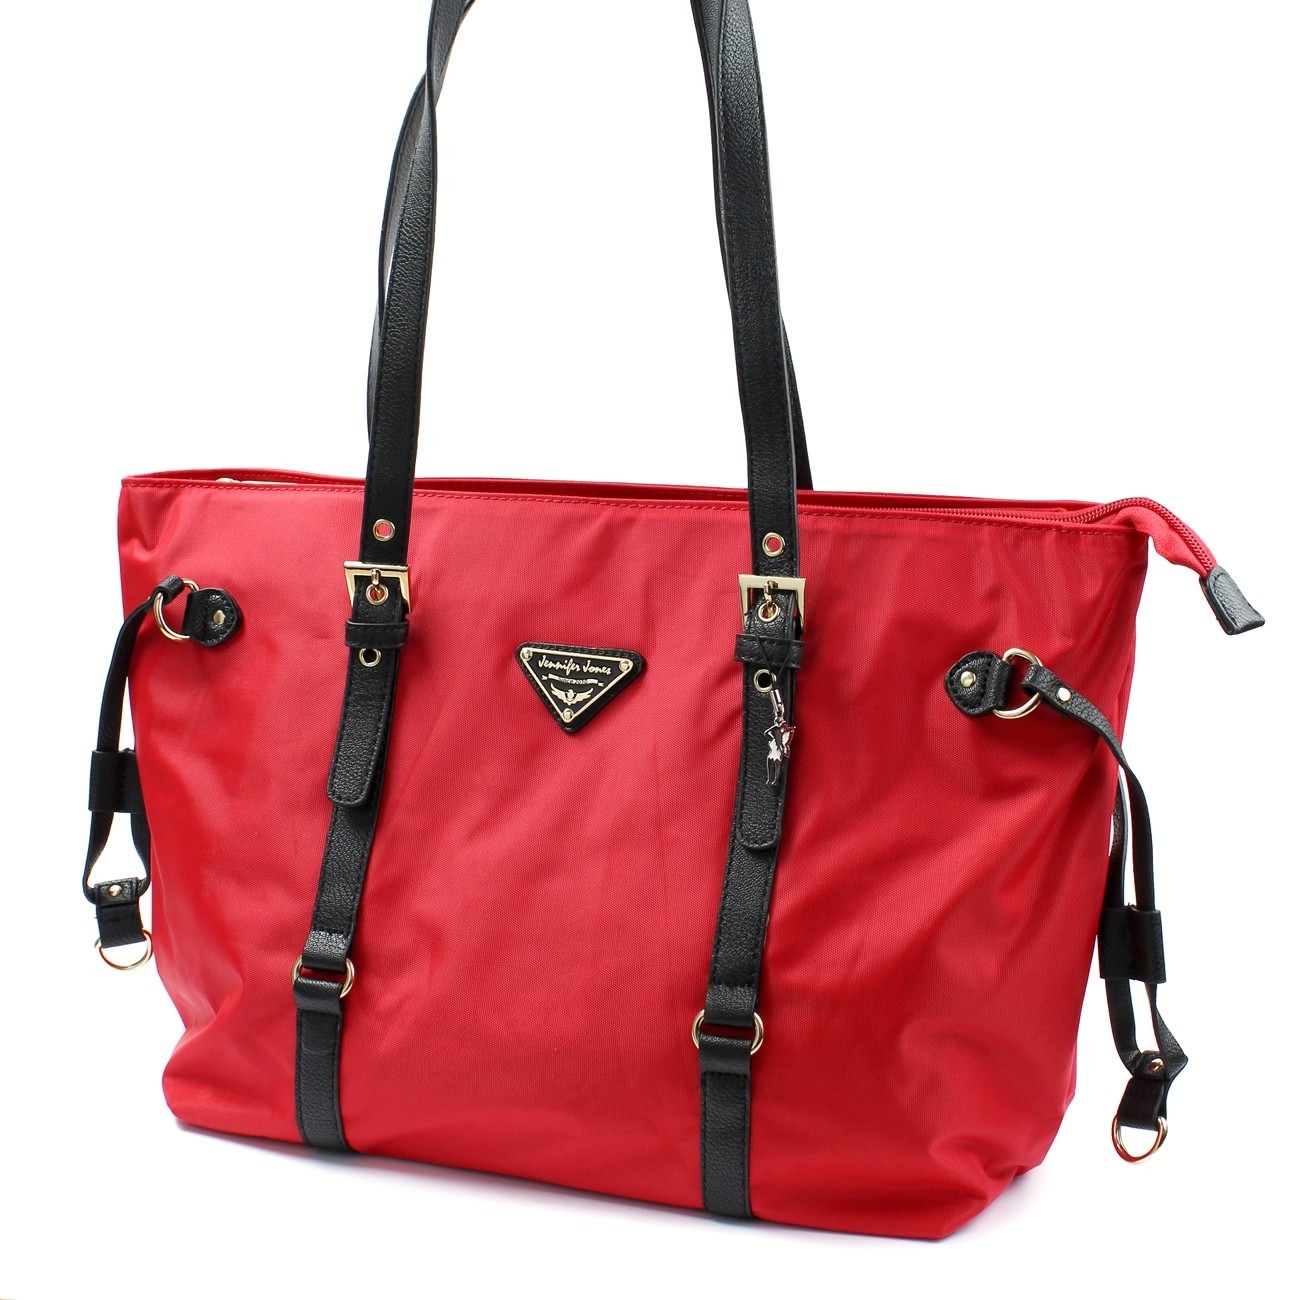 Shopper Damen Handtasche rot Nylon Schultertasche Jennifer Jones OTJ211R